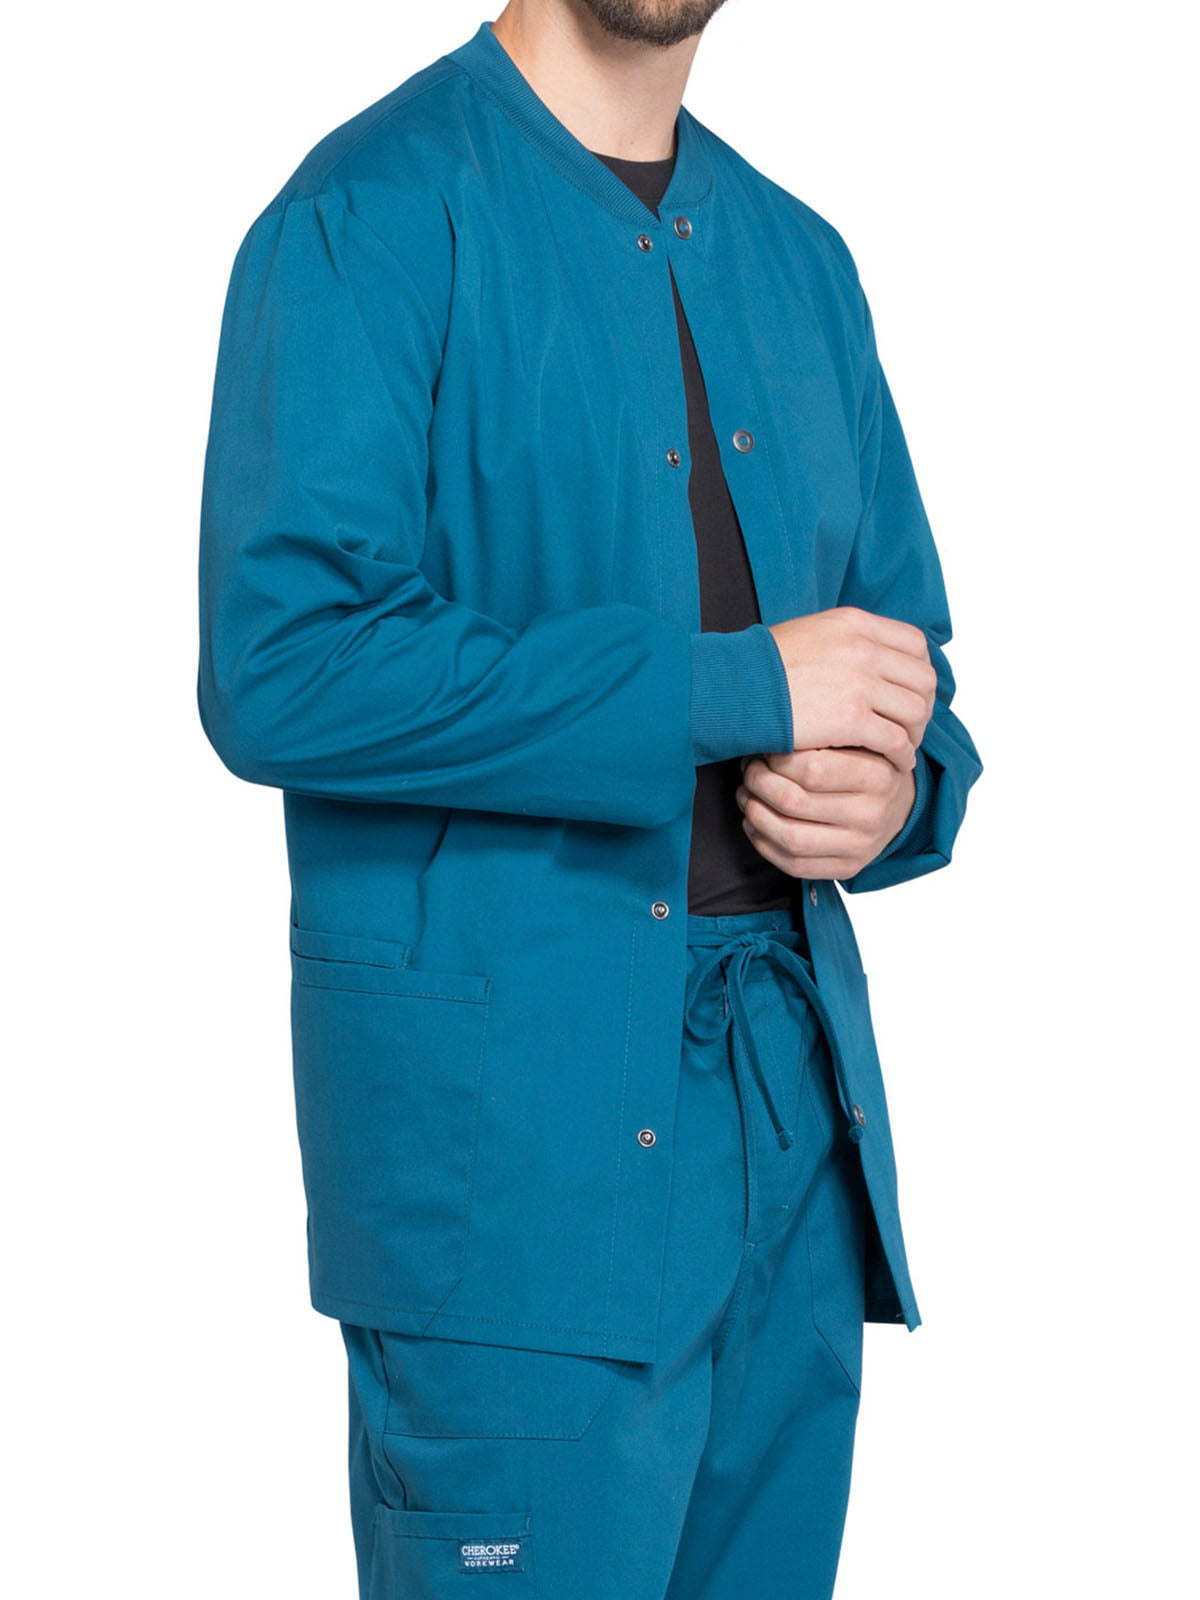 Men's 2-Pocket Snap Front Scrub Jacket